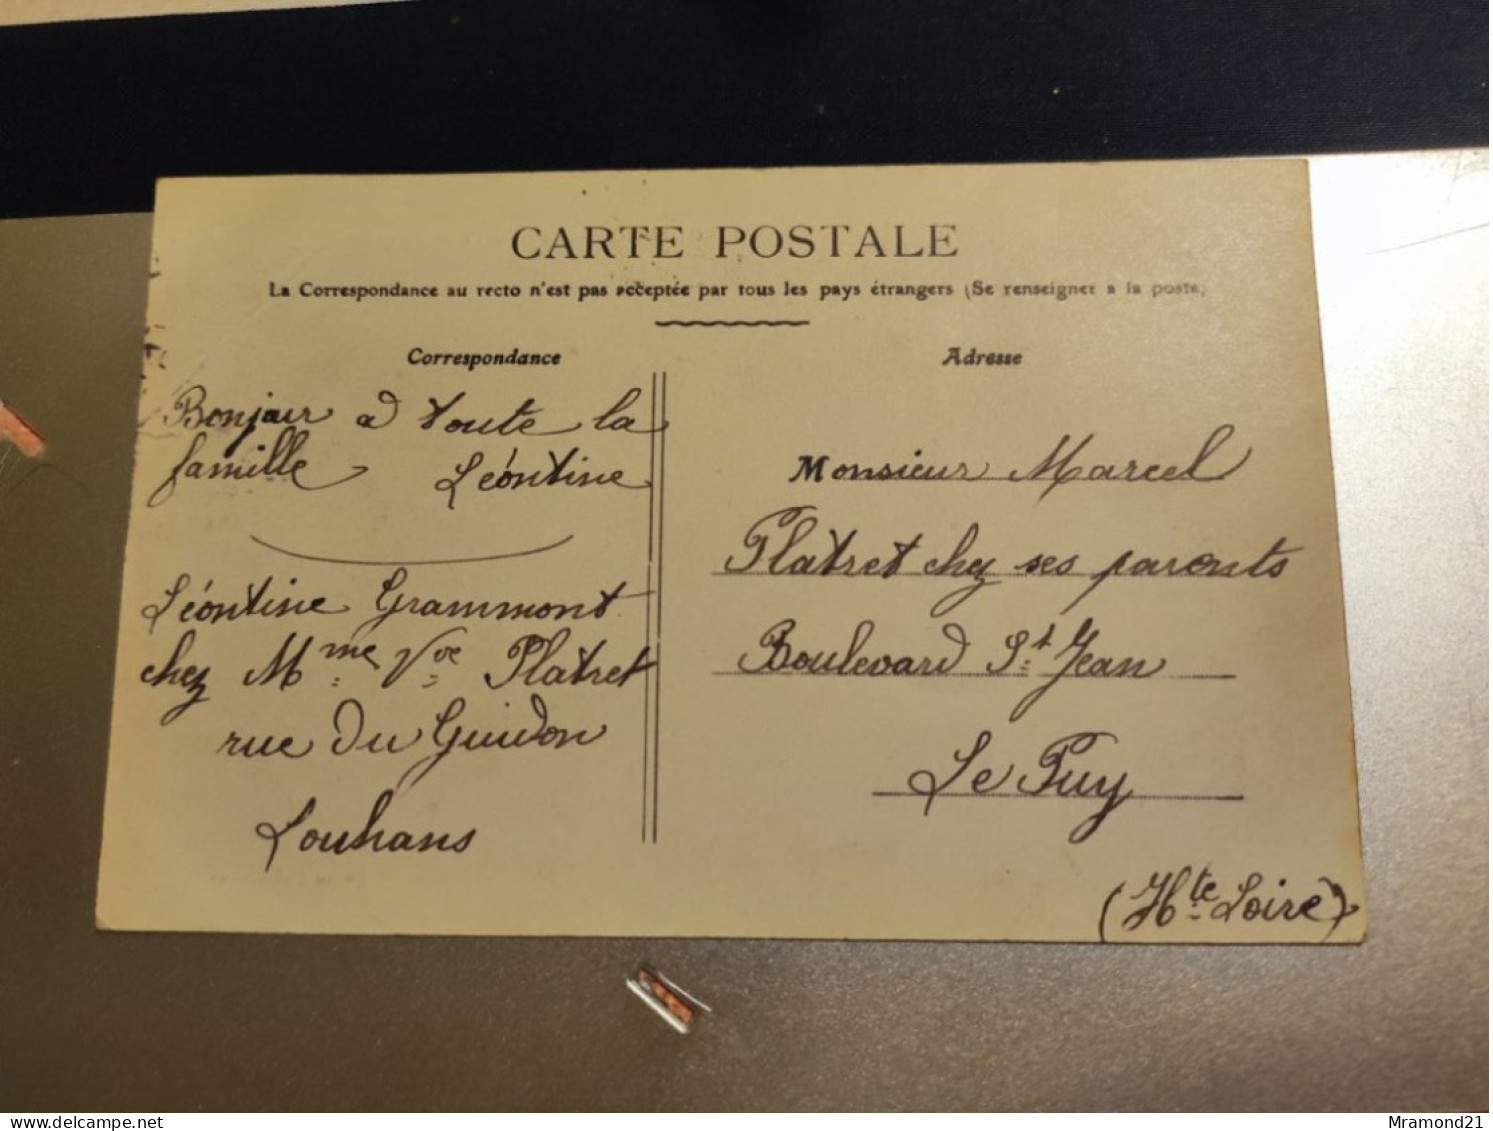 Cartes postales anciennes de France